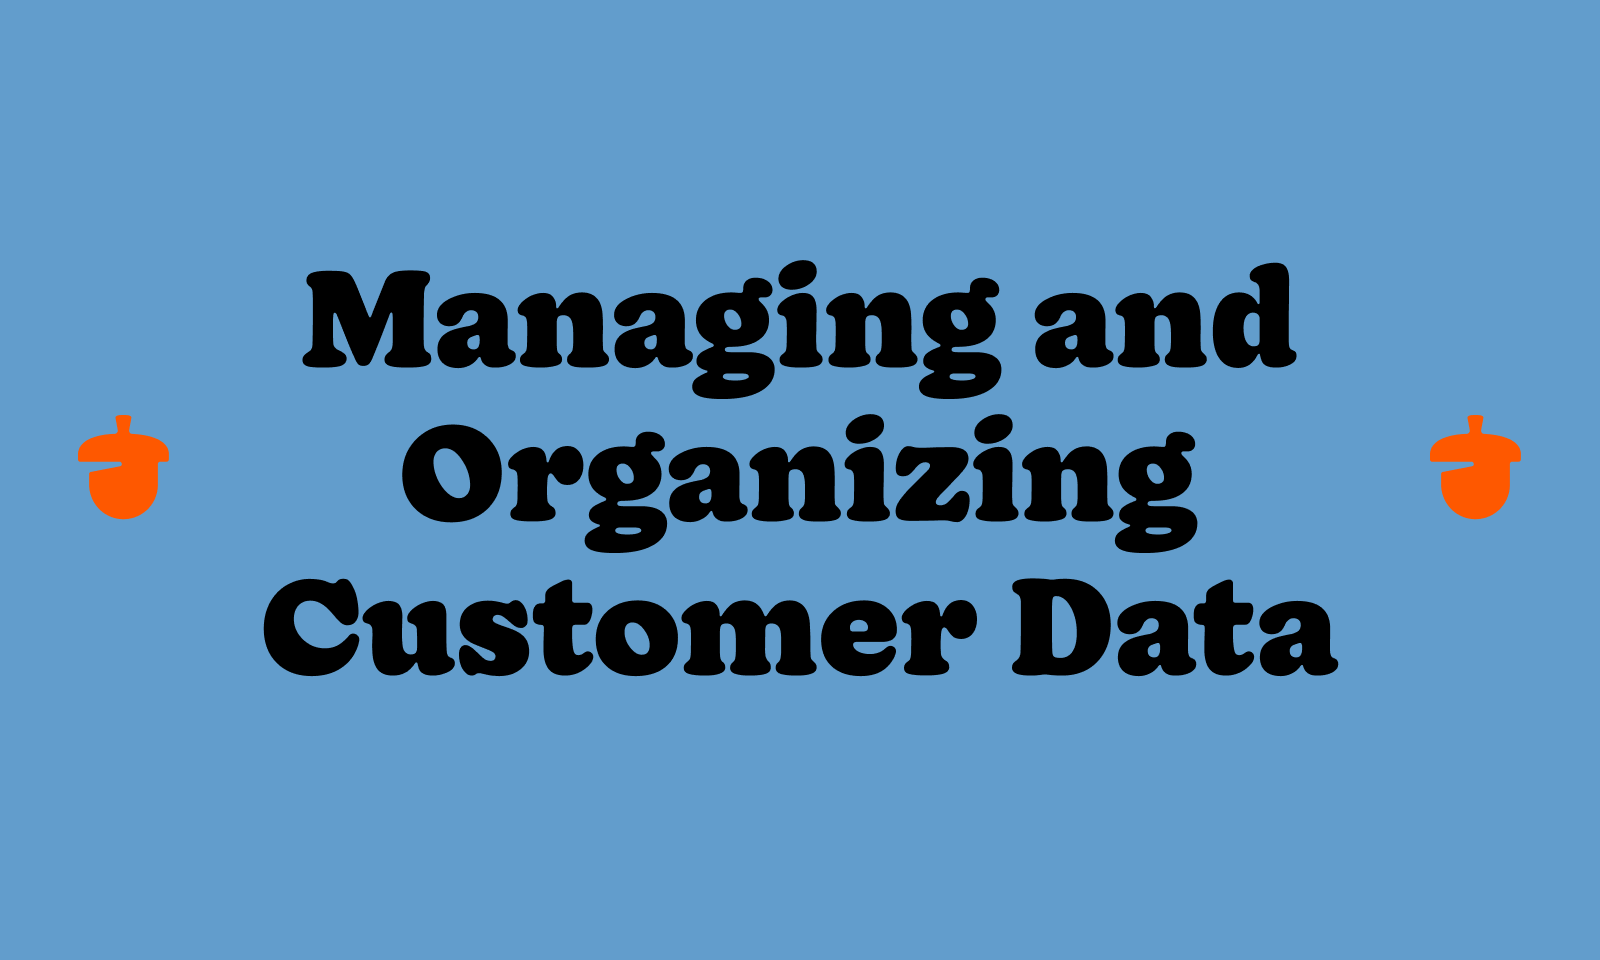 Managing and organizing customer data